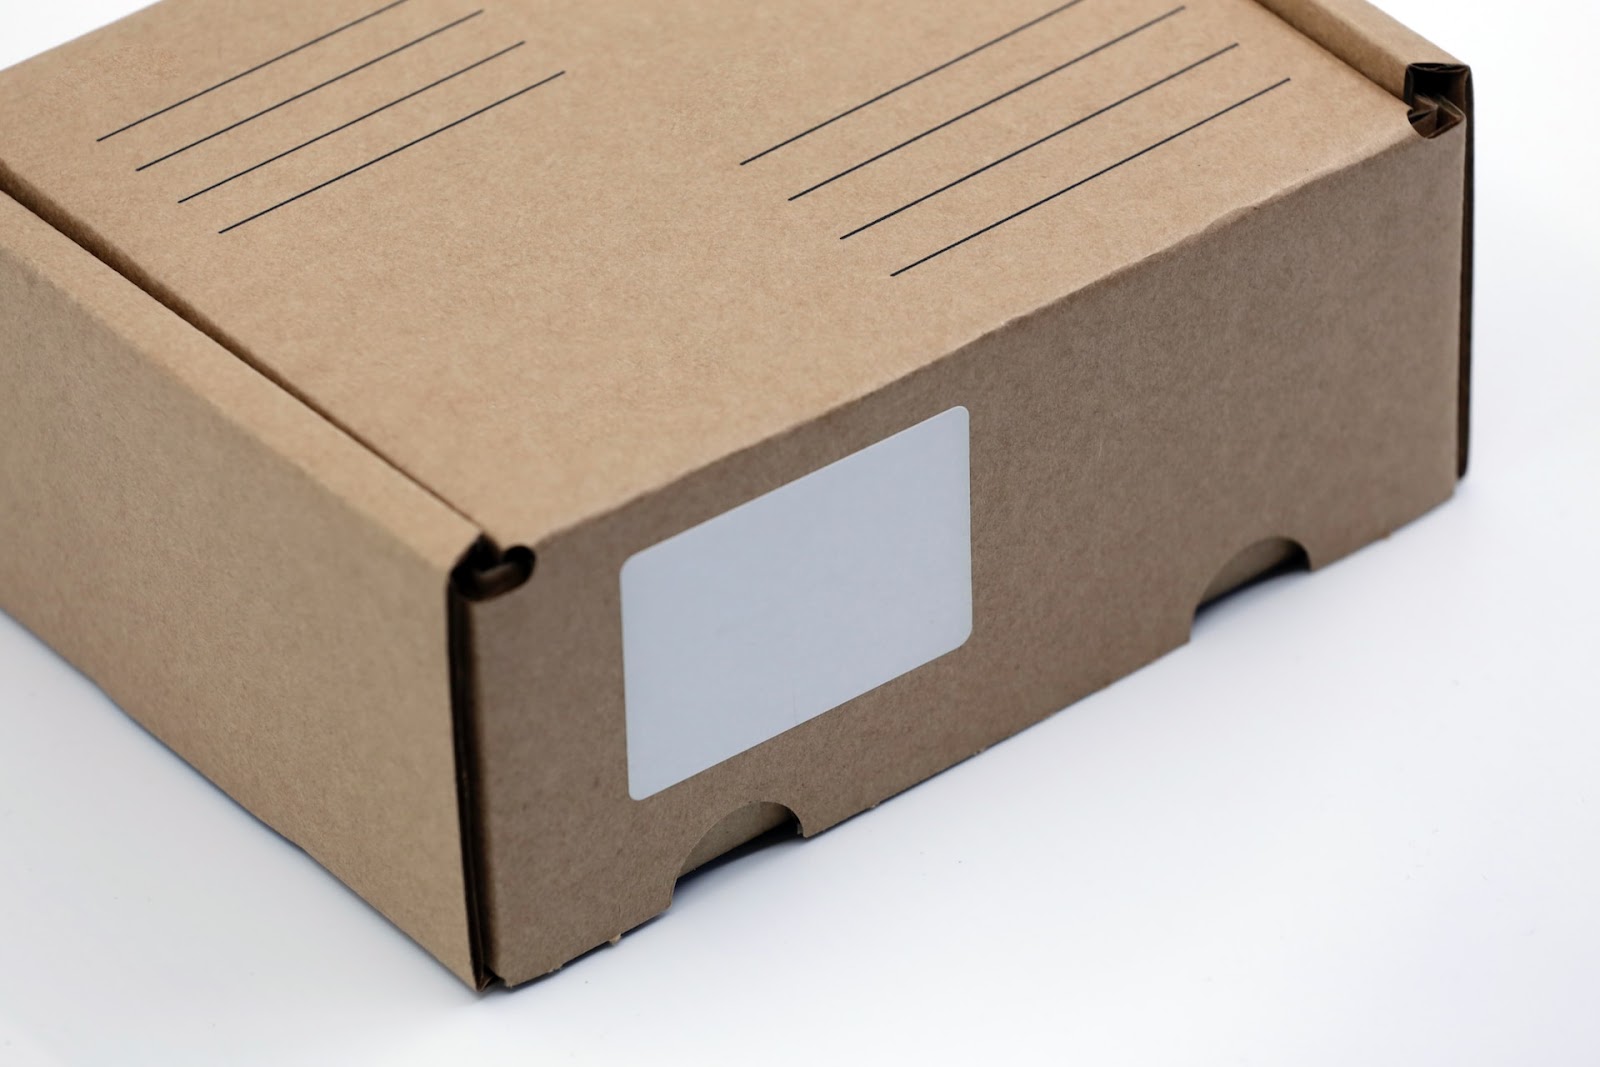 A box showing shipping insurance